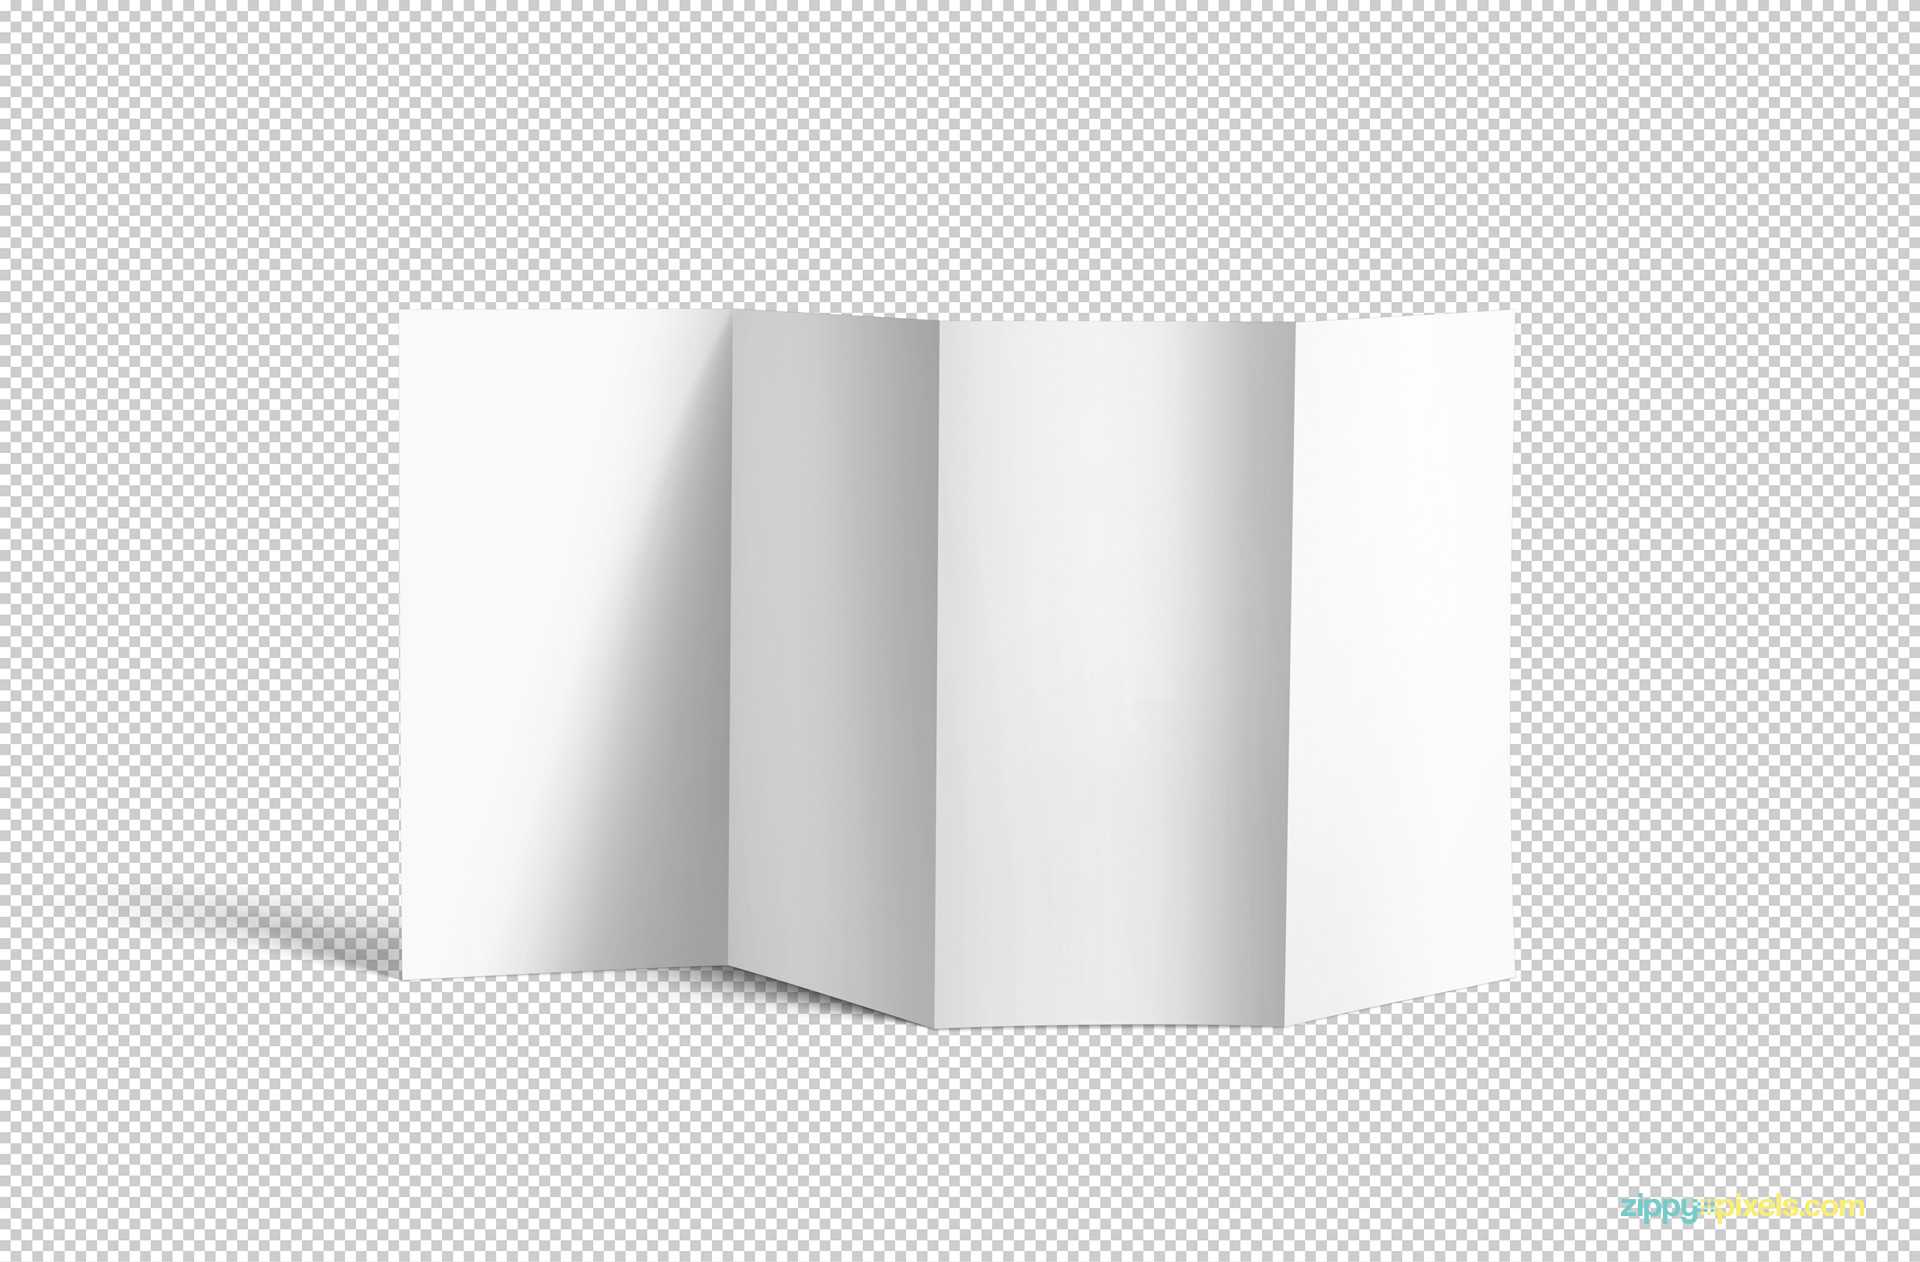 Free 4 Fold Brochure Mockup | Zippypixels Within 4 Fold Brochure Template Word